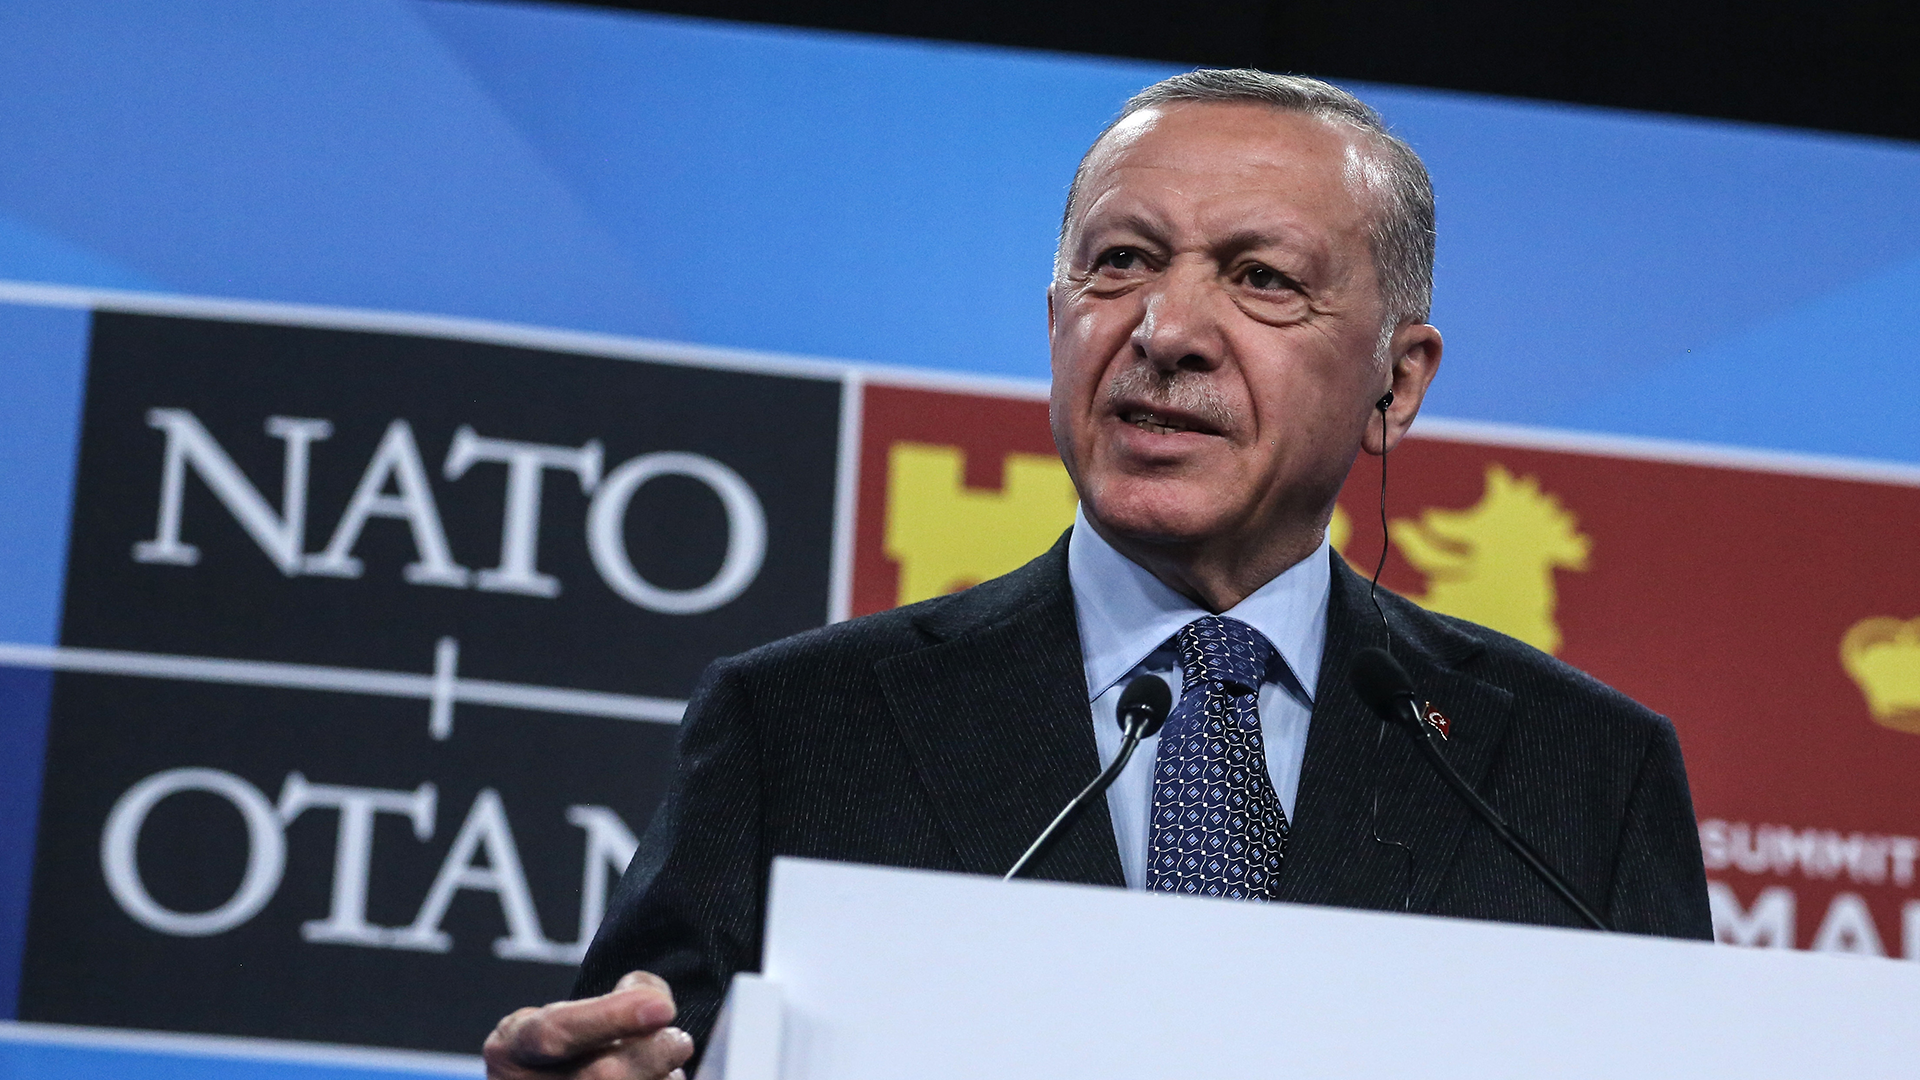 Turkish President Recep Tayyip Erdogan speaking at NATO meeting in Madrid